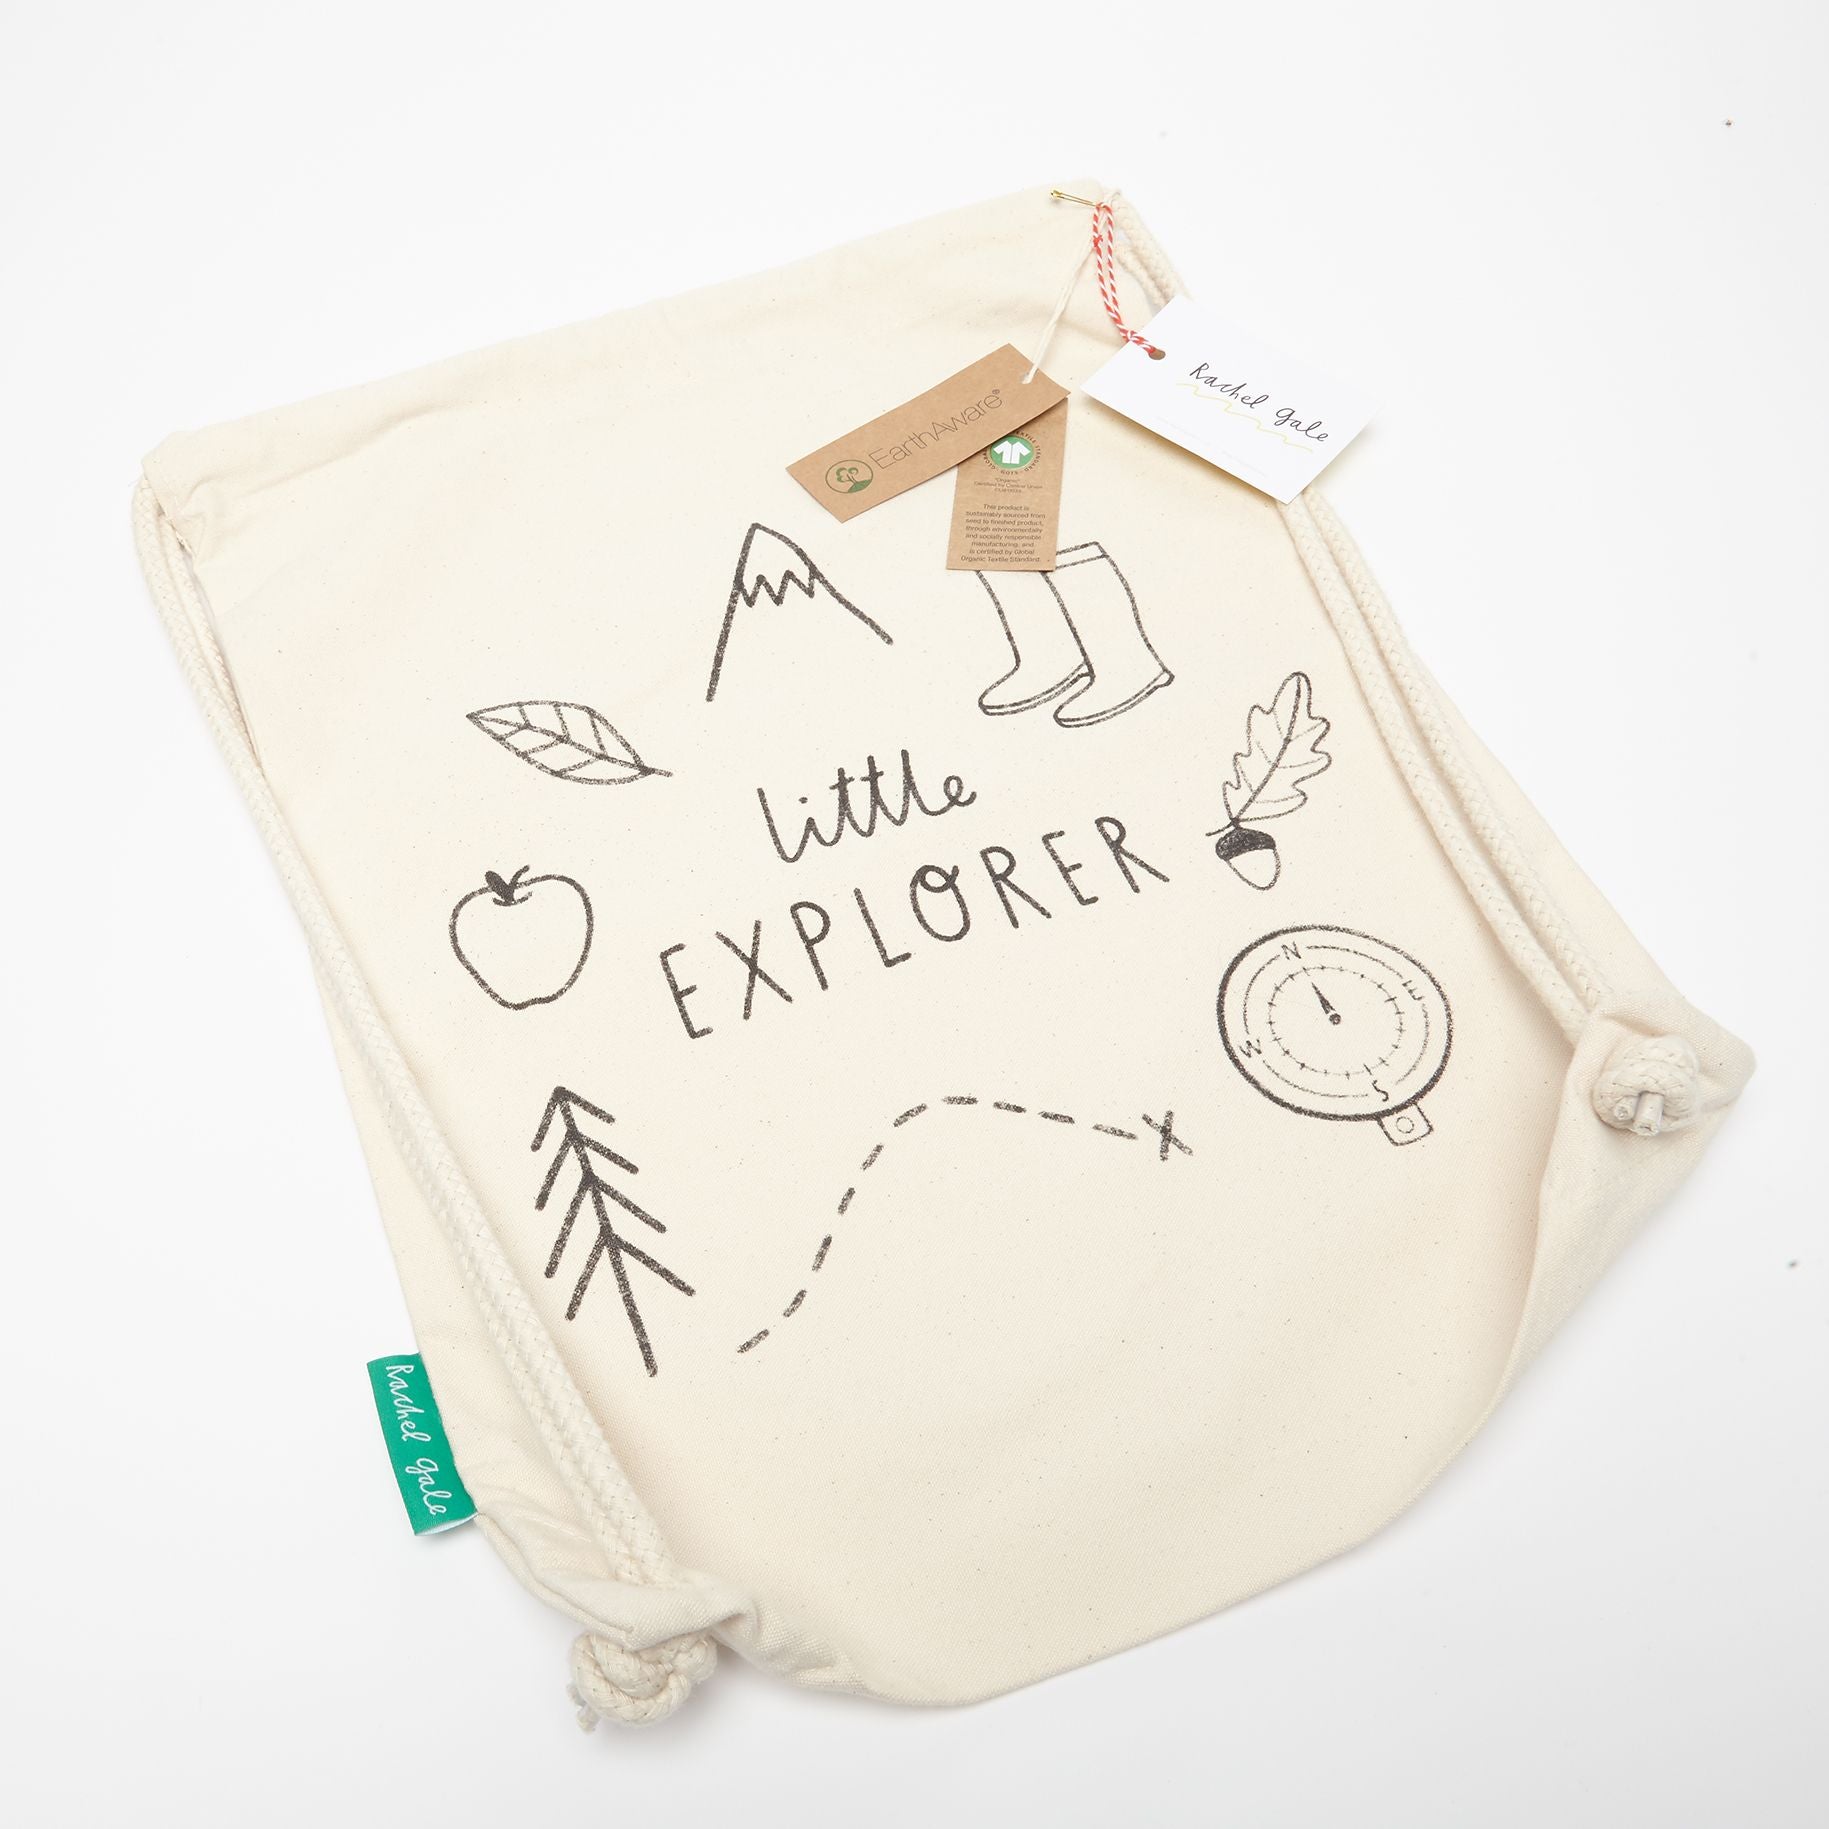 Little Explorer Kids Kit Bag - Organic cotton, screen printed design